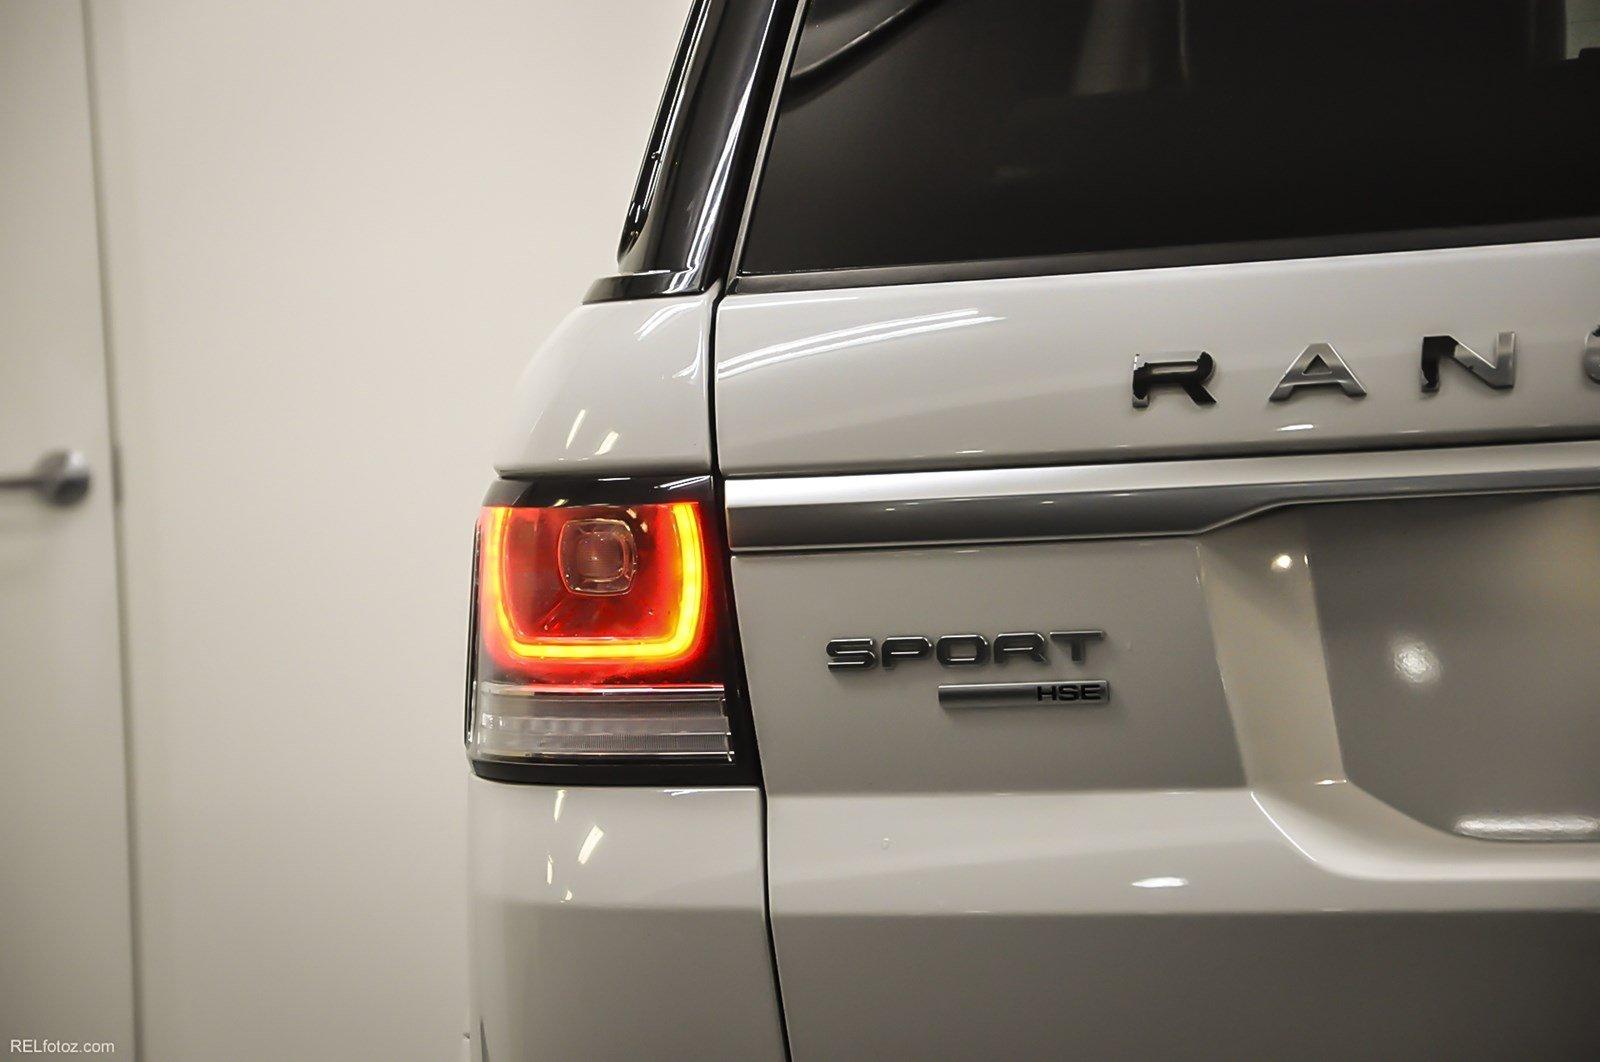 Used 2014 Land Rover Range Rover Sport HSE for sale Sold at Gravity Autos Marietta in Marietta GA 30060 7